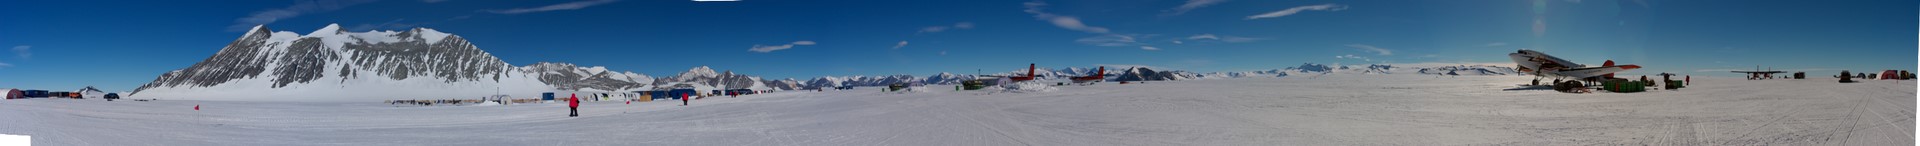 Union Glacier camp from ski runway